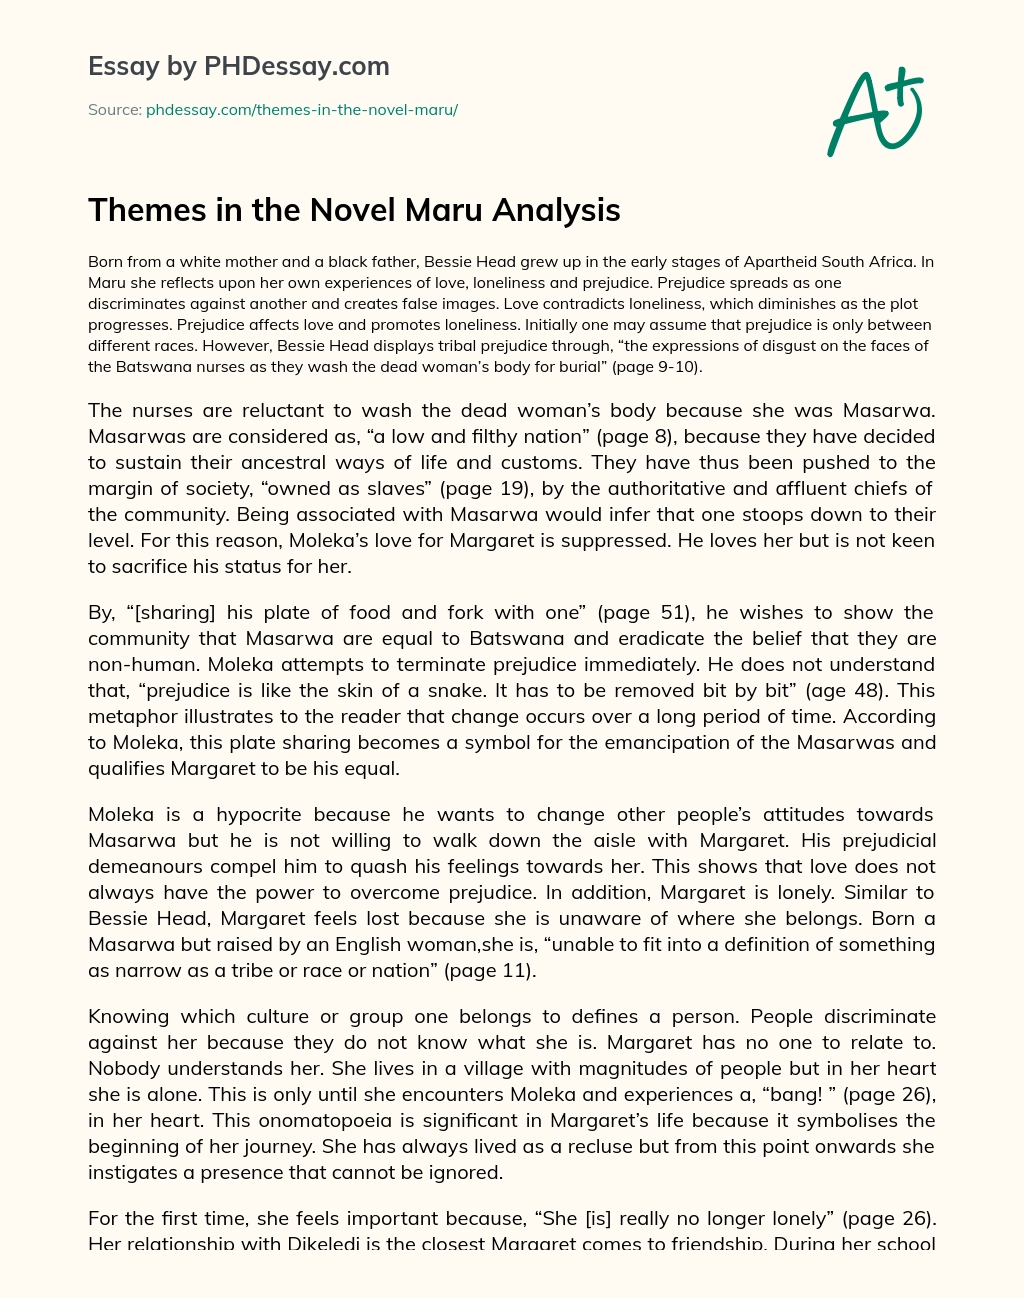 Themes in the Novel Maru Analysis essay